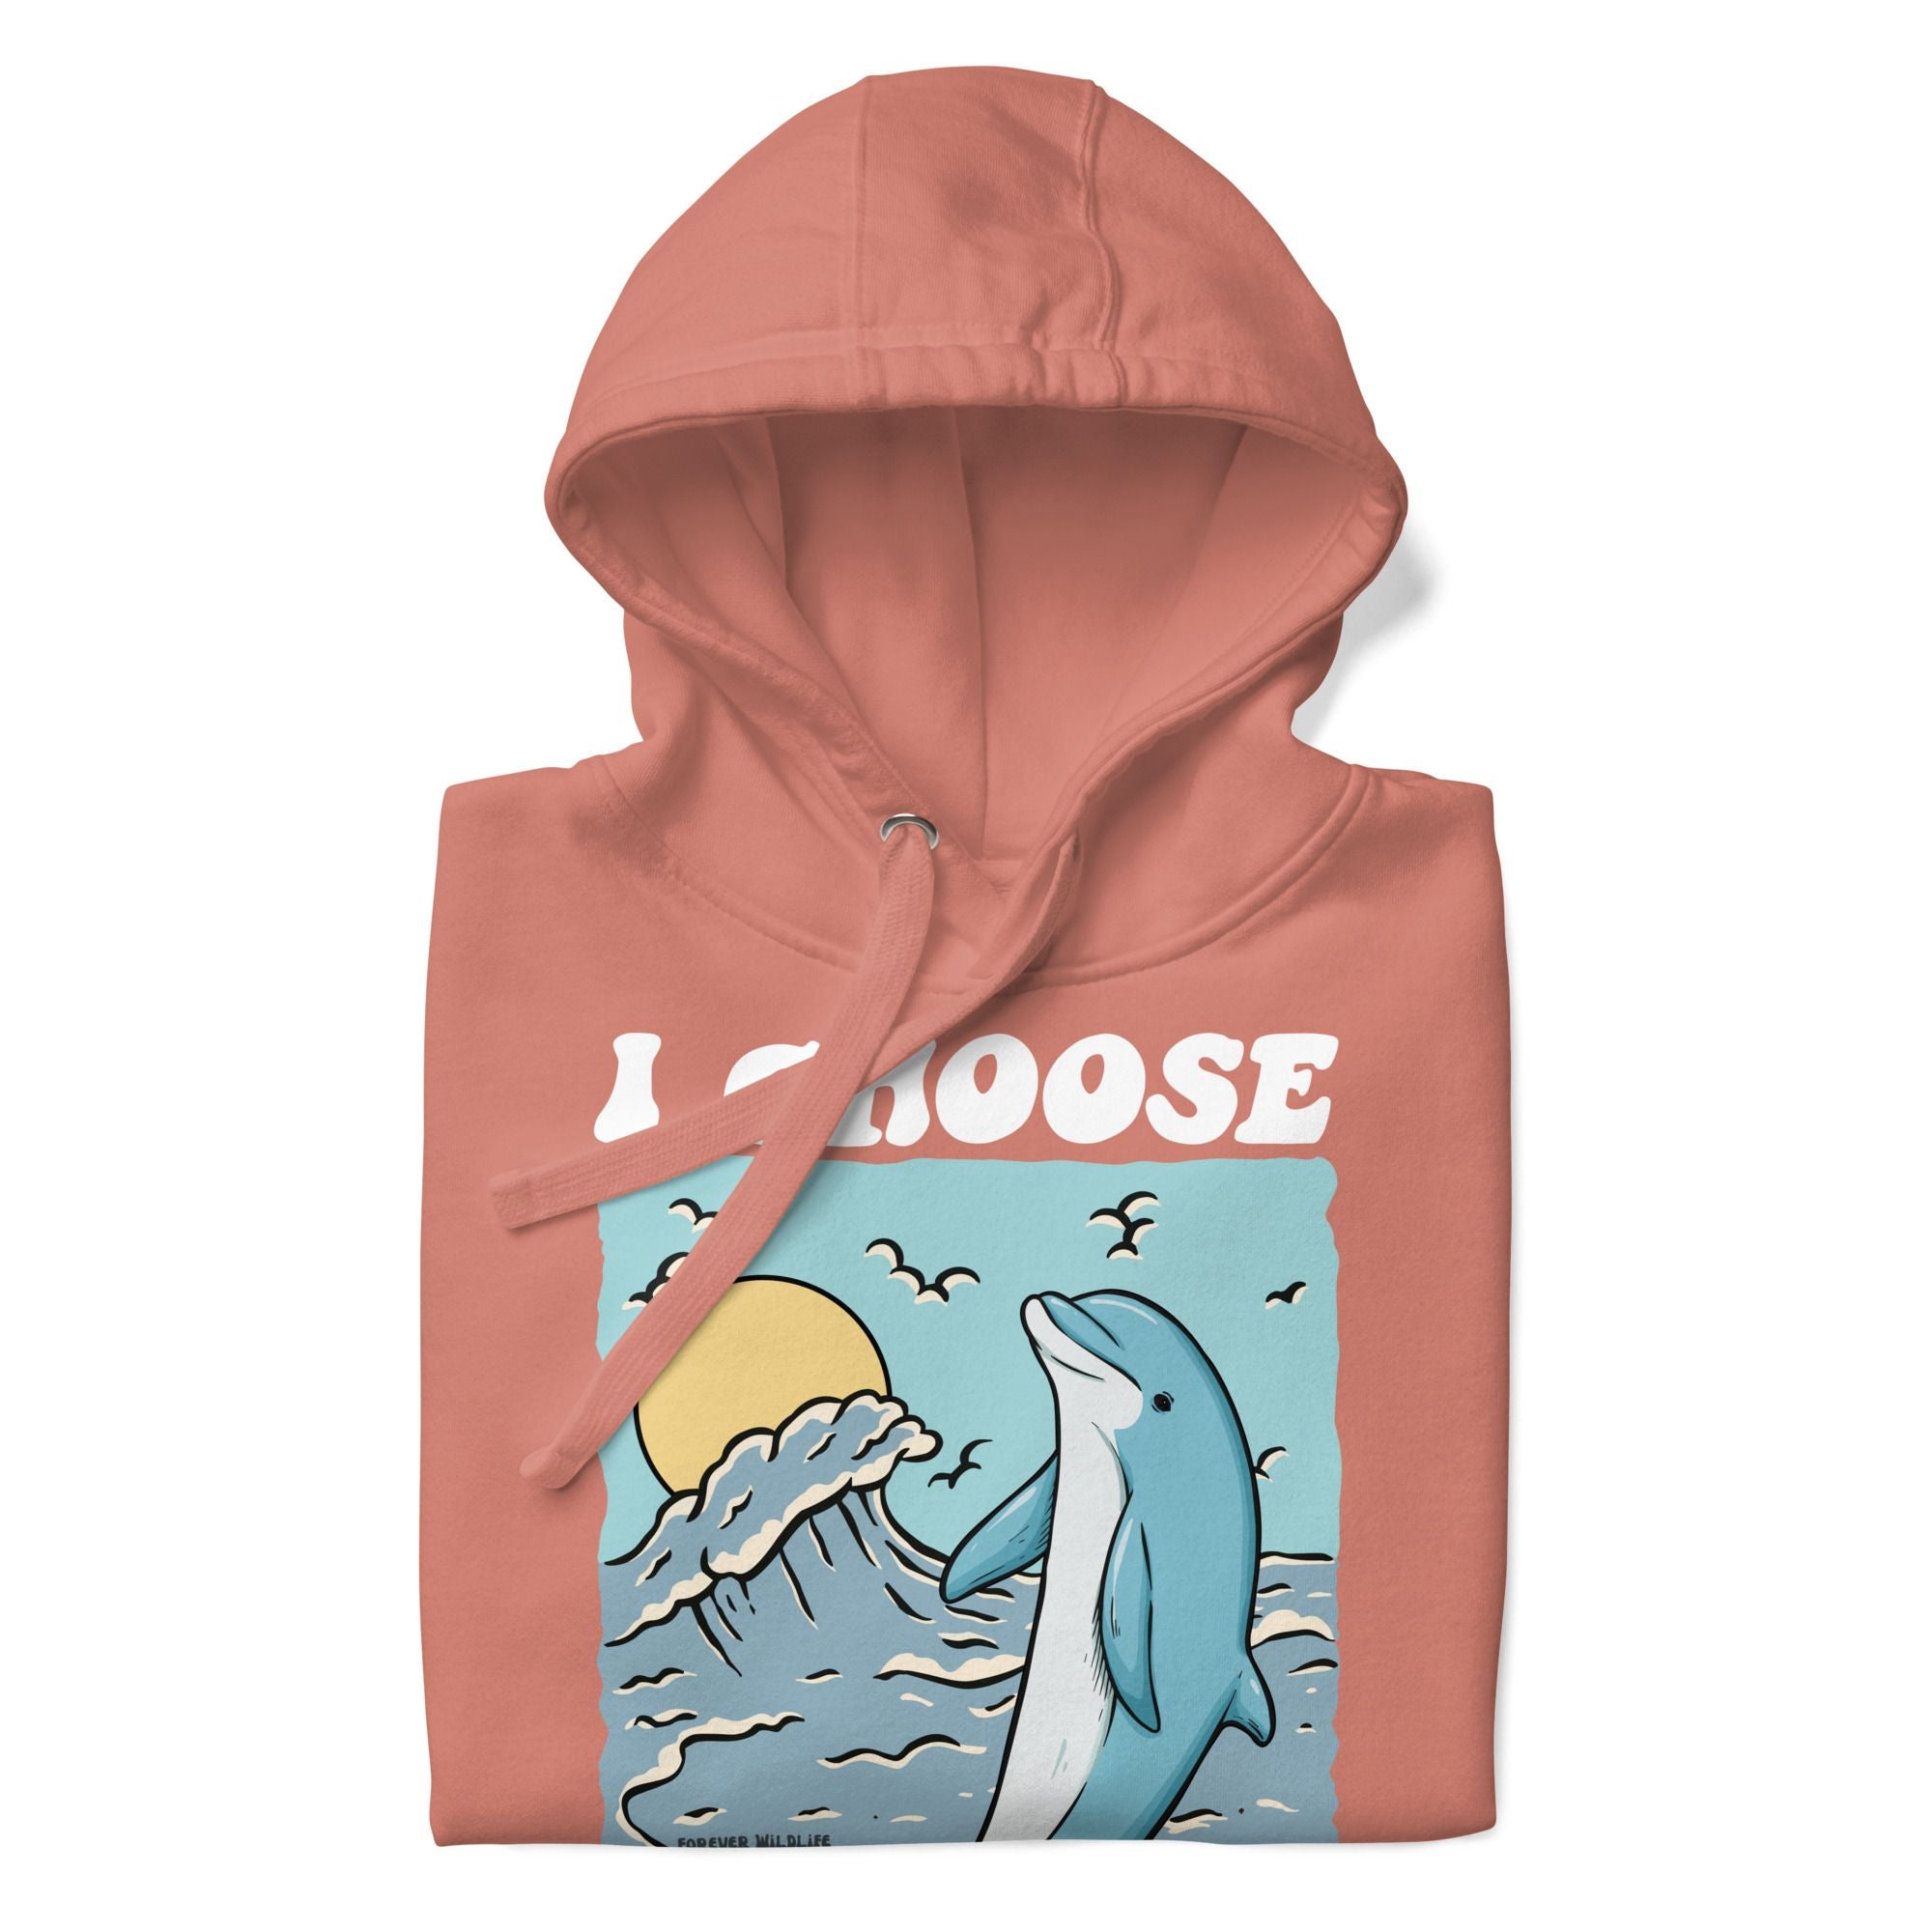 Dolphin Hoodie in Dusty Rose – Premium Wildlife Animal Inspirational Hoodie Design, part of Wildlife Hoodies & Clothing from Forever Wildlife